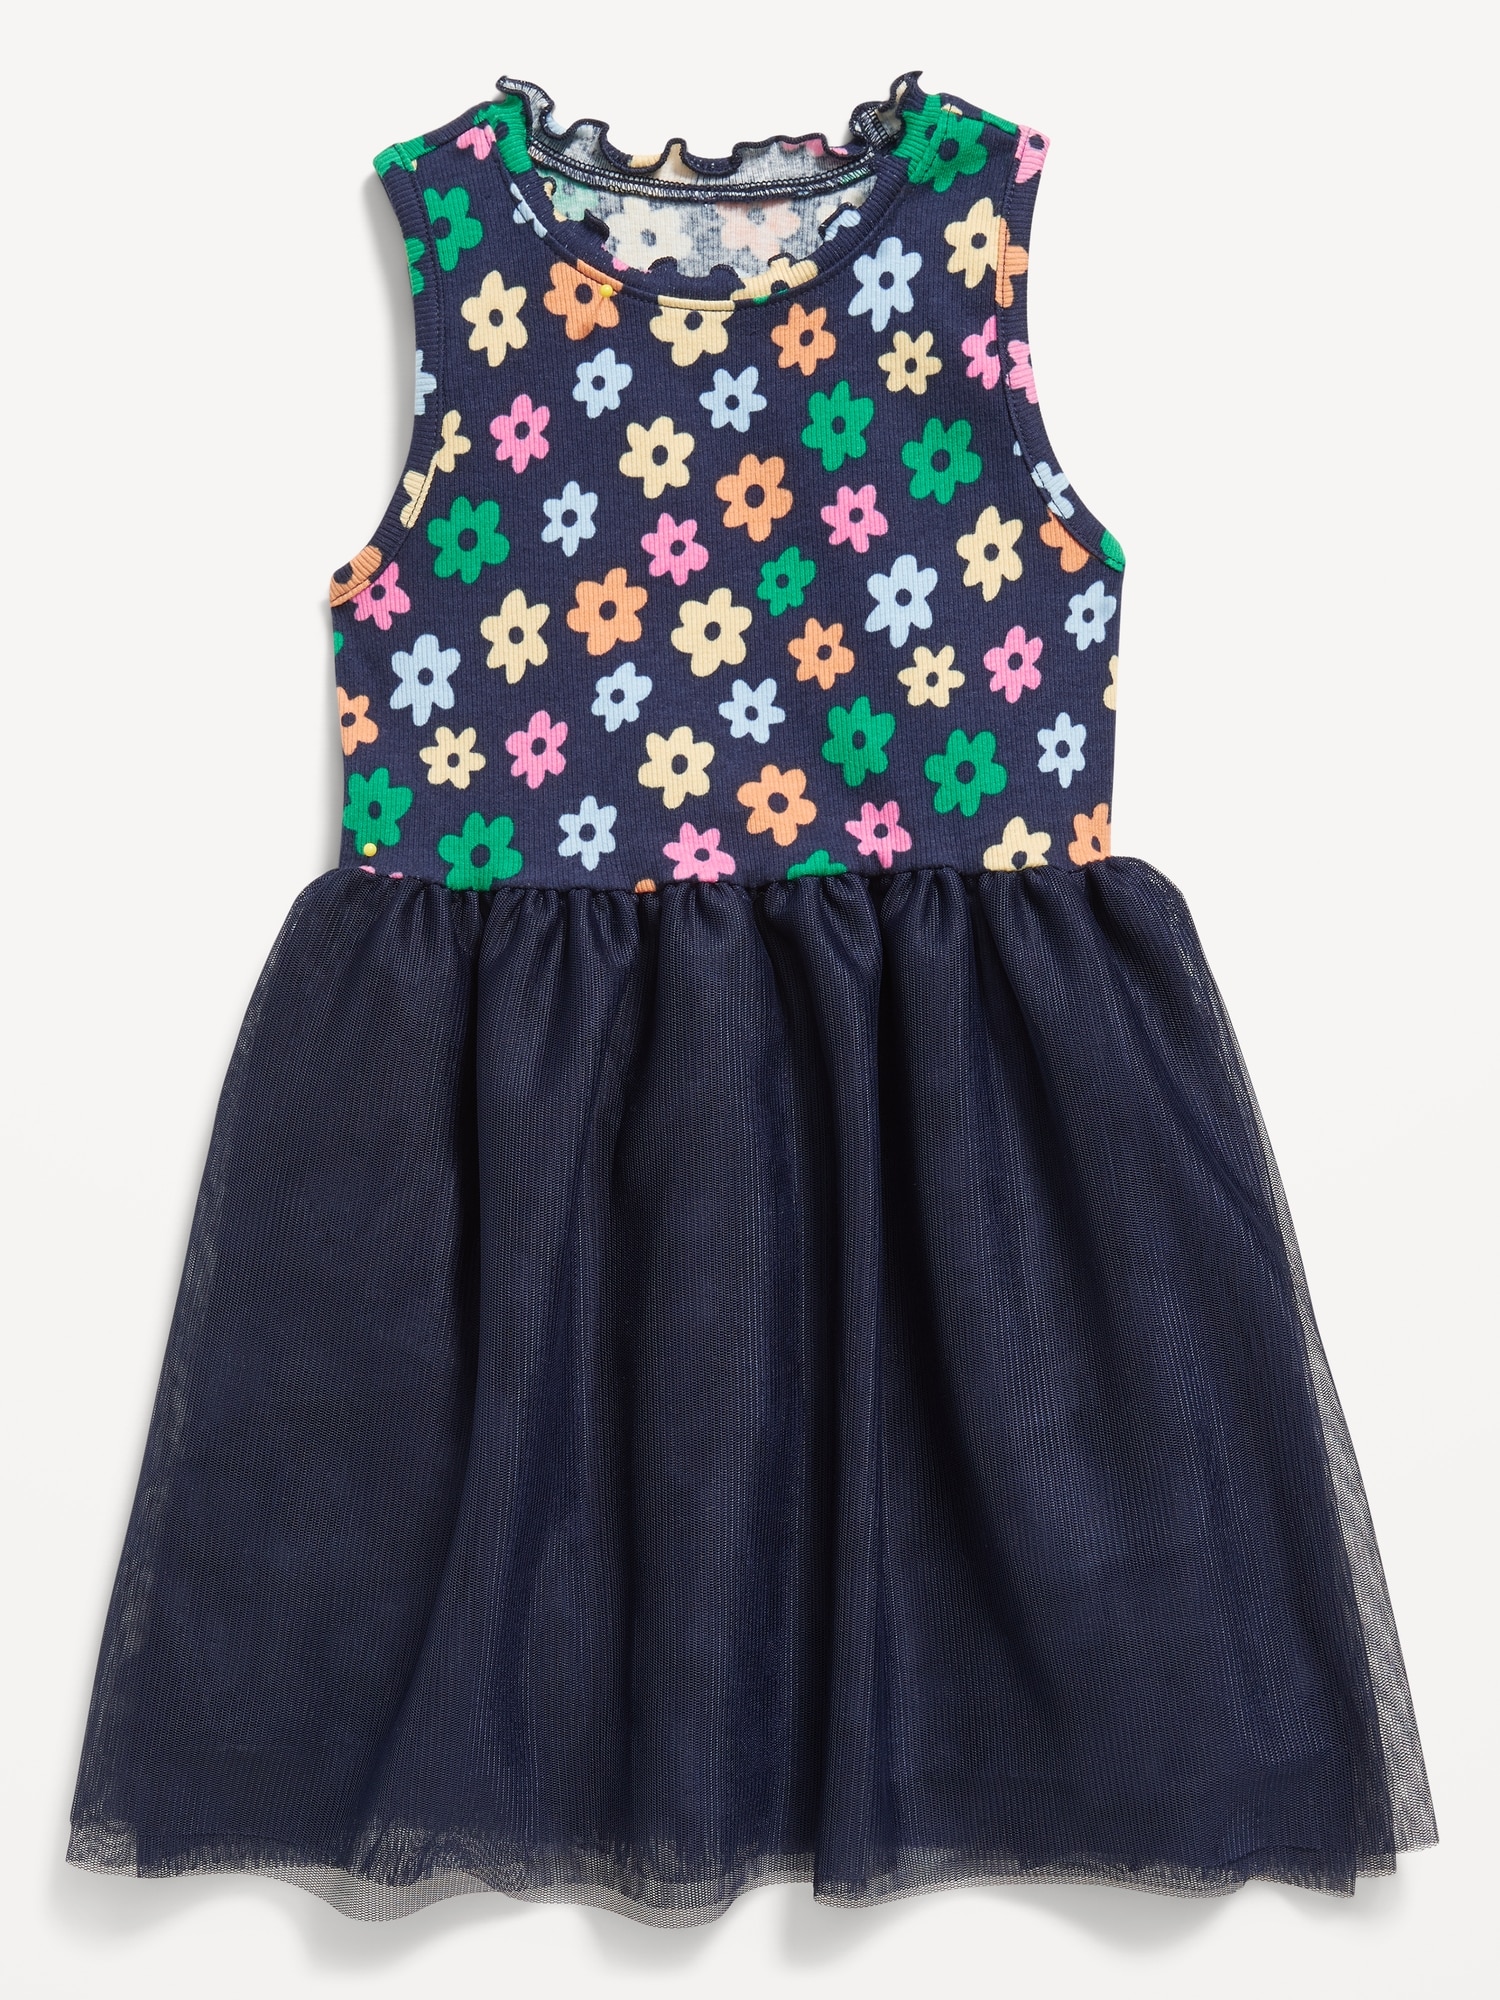 Cute Little Girl Clothes  Toddler Girl Easter Dresses 291468